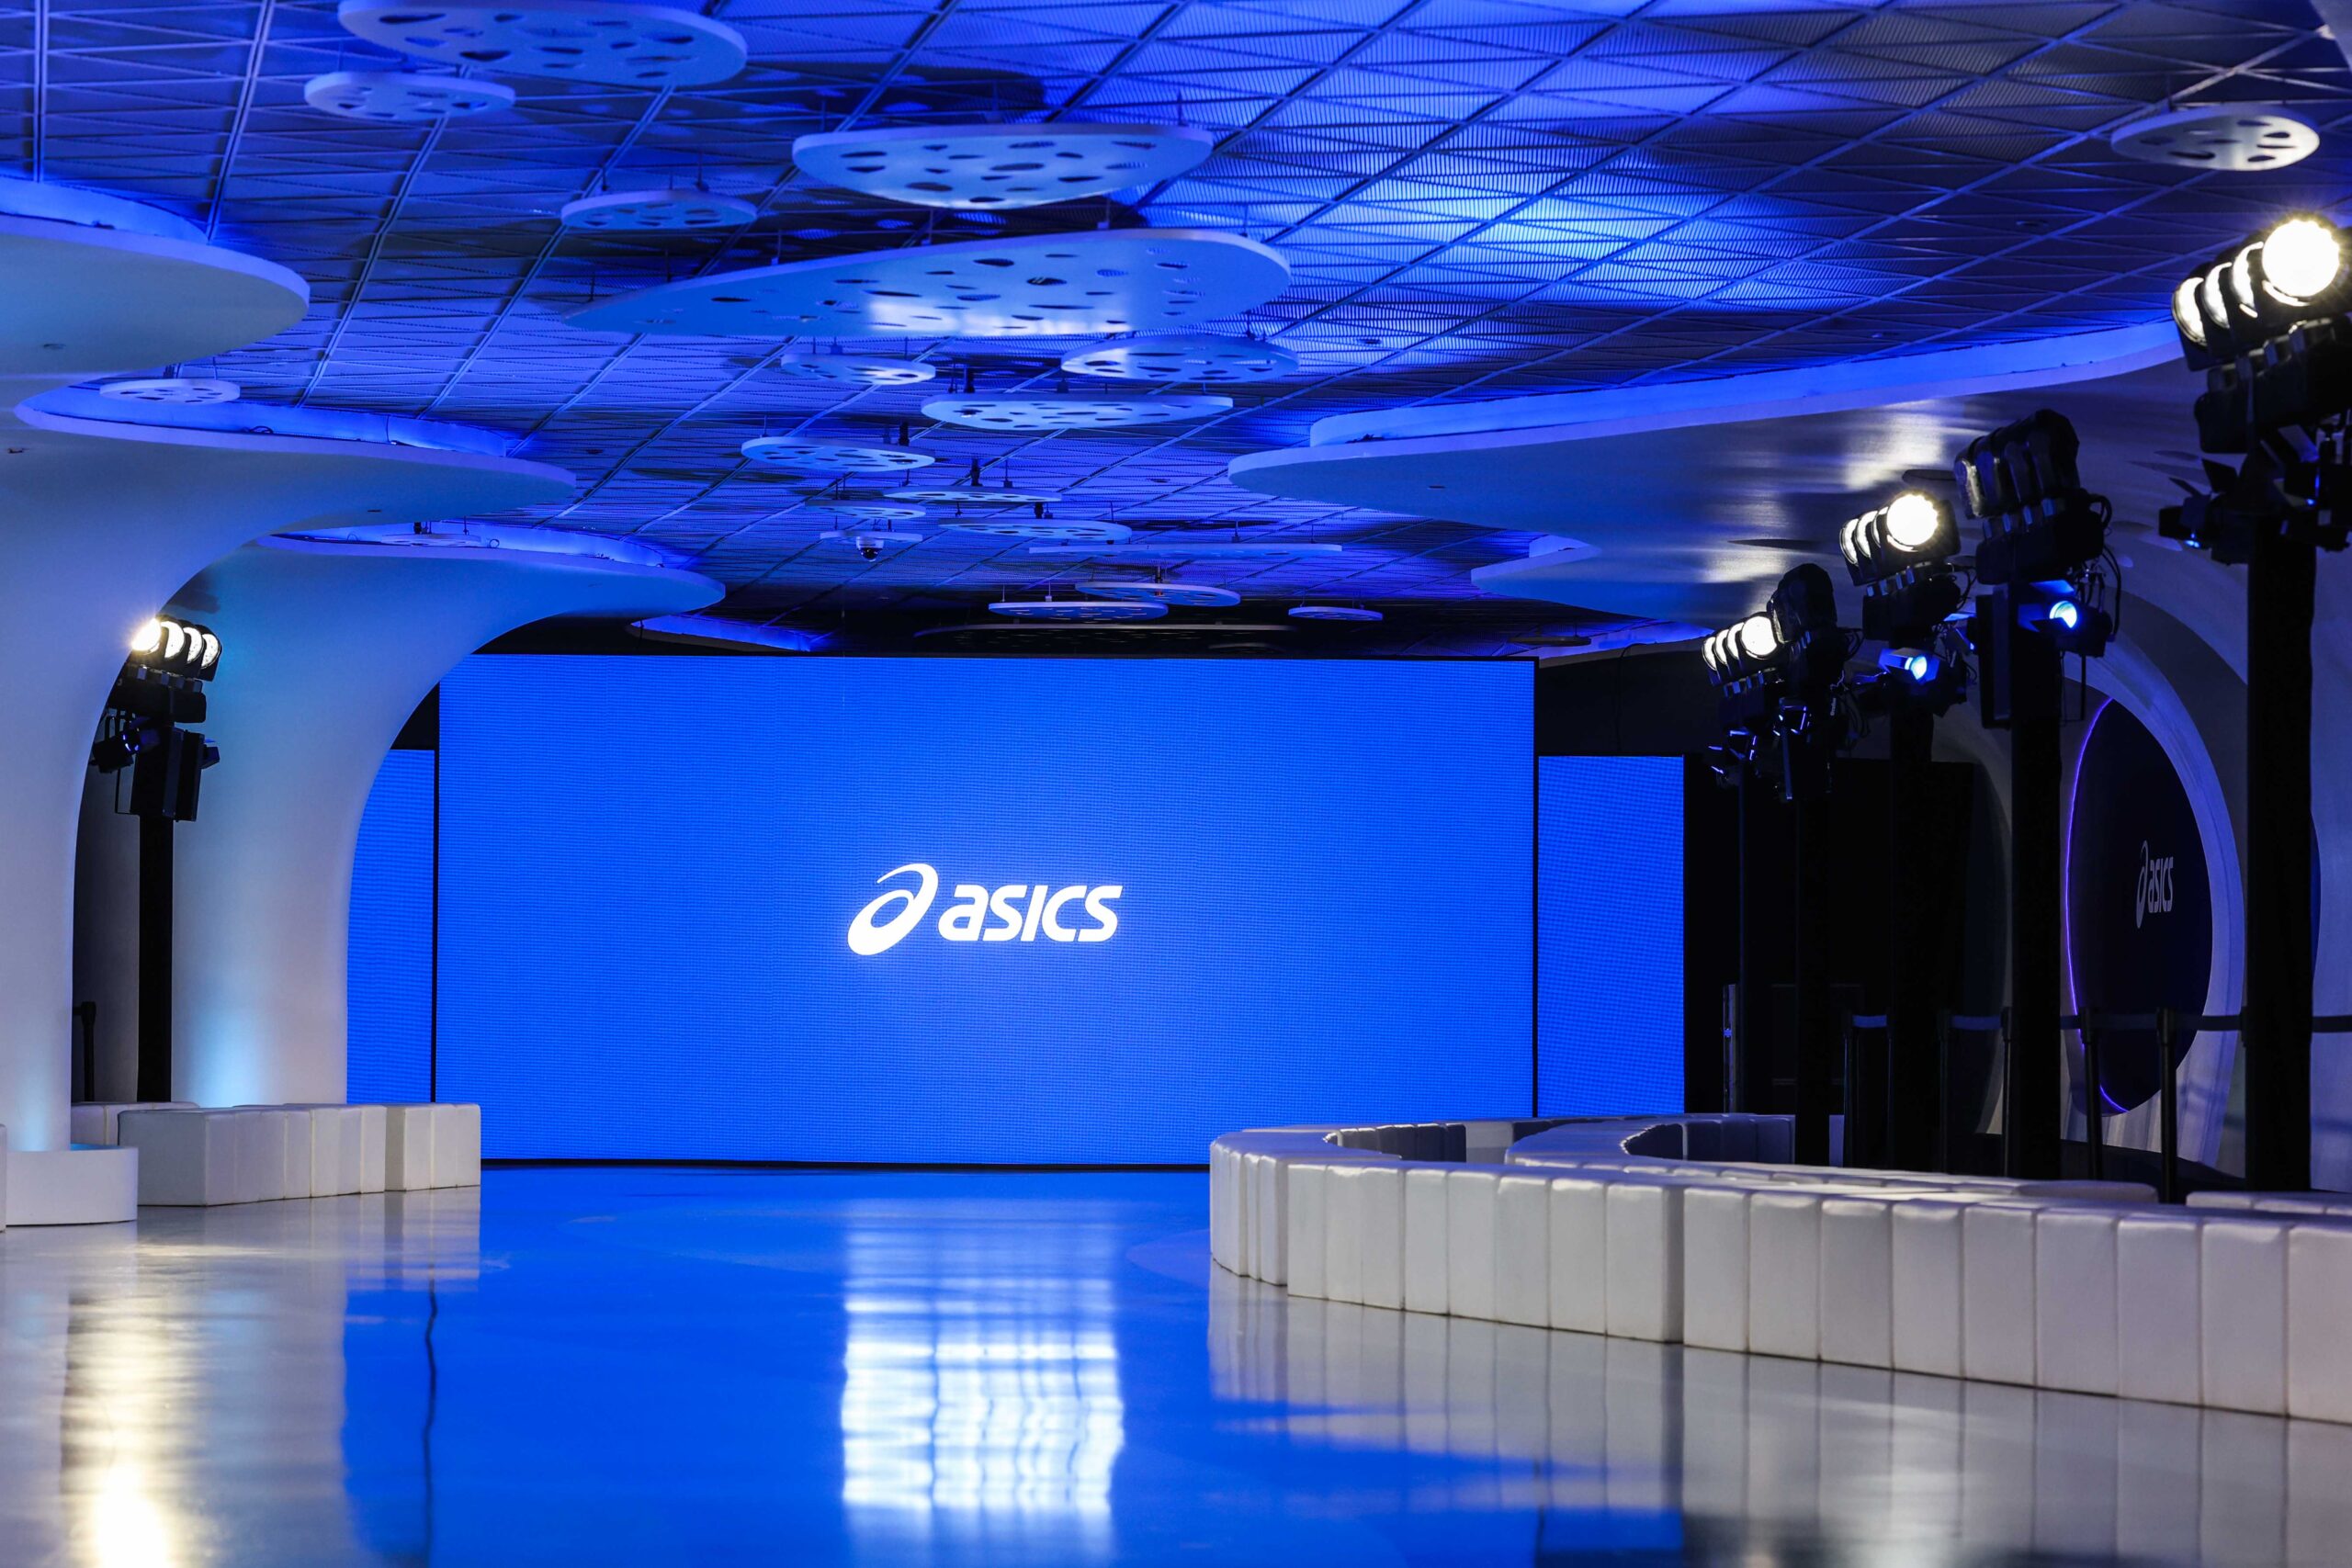 Asics AW21 Launch Show 16th December Shanghai – 4